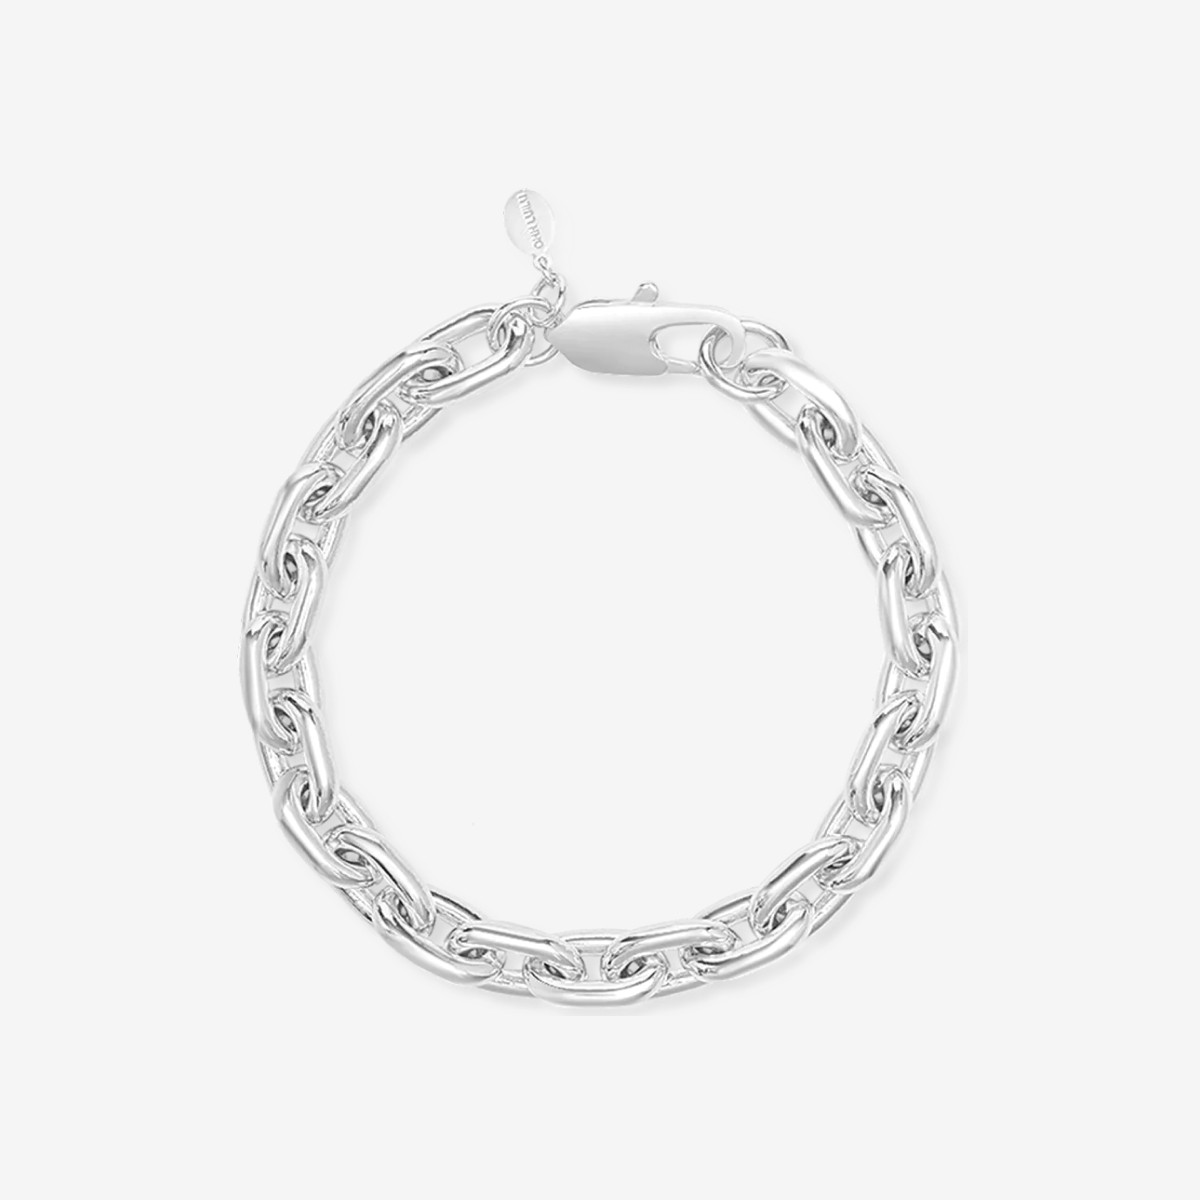 Chunky Bracelet 19 cm - Armbänder - Silber